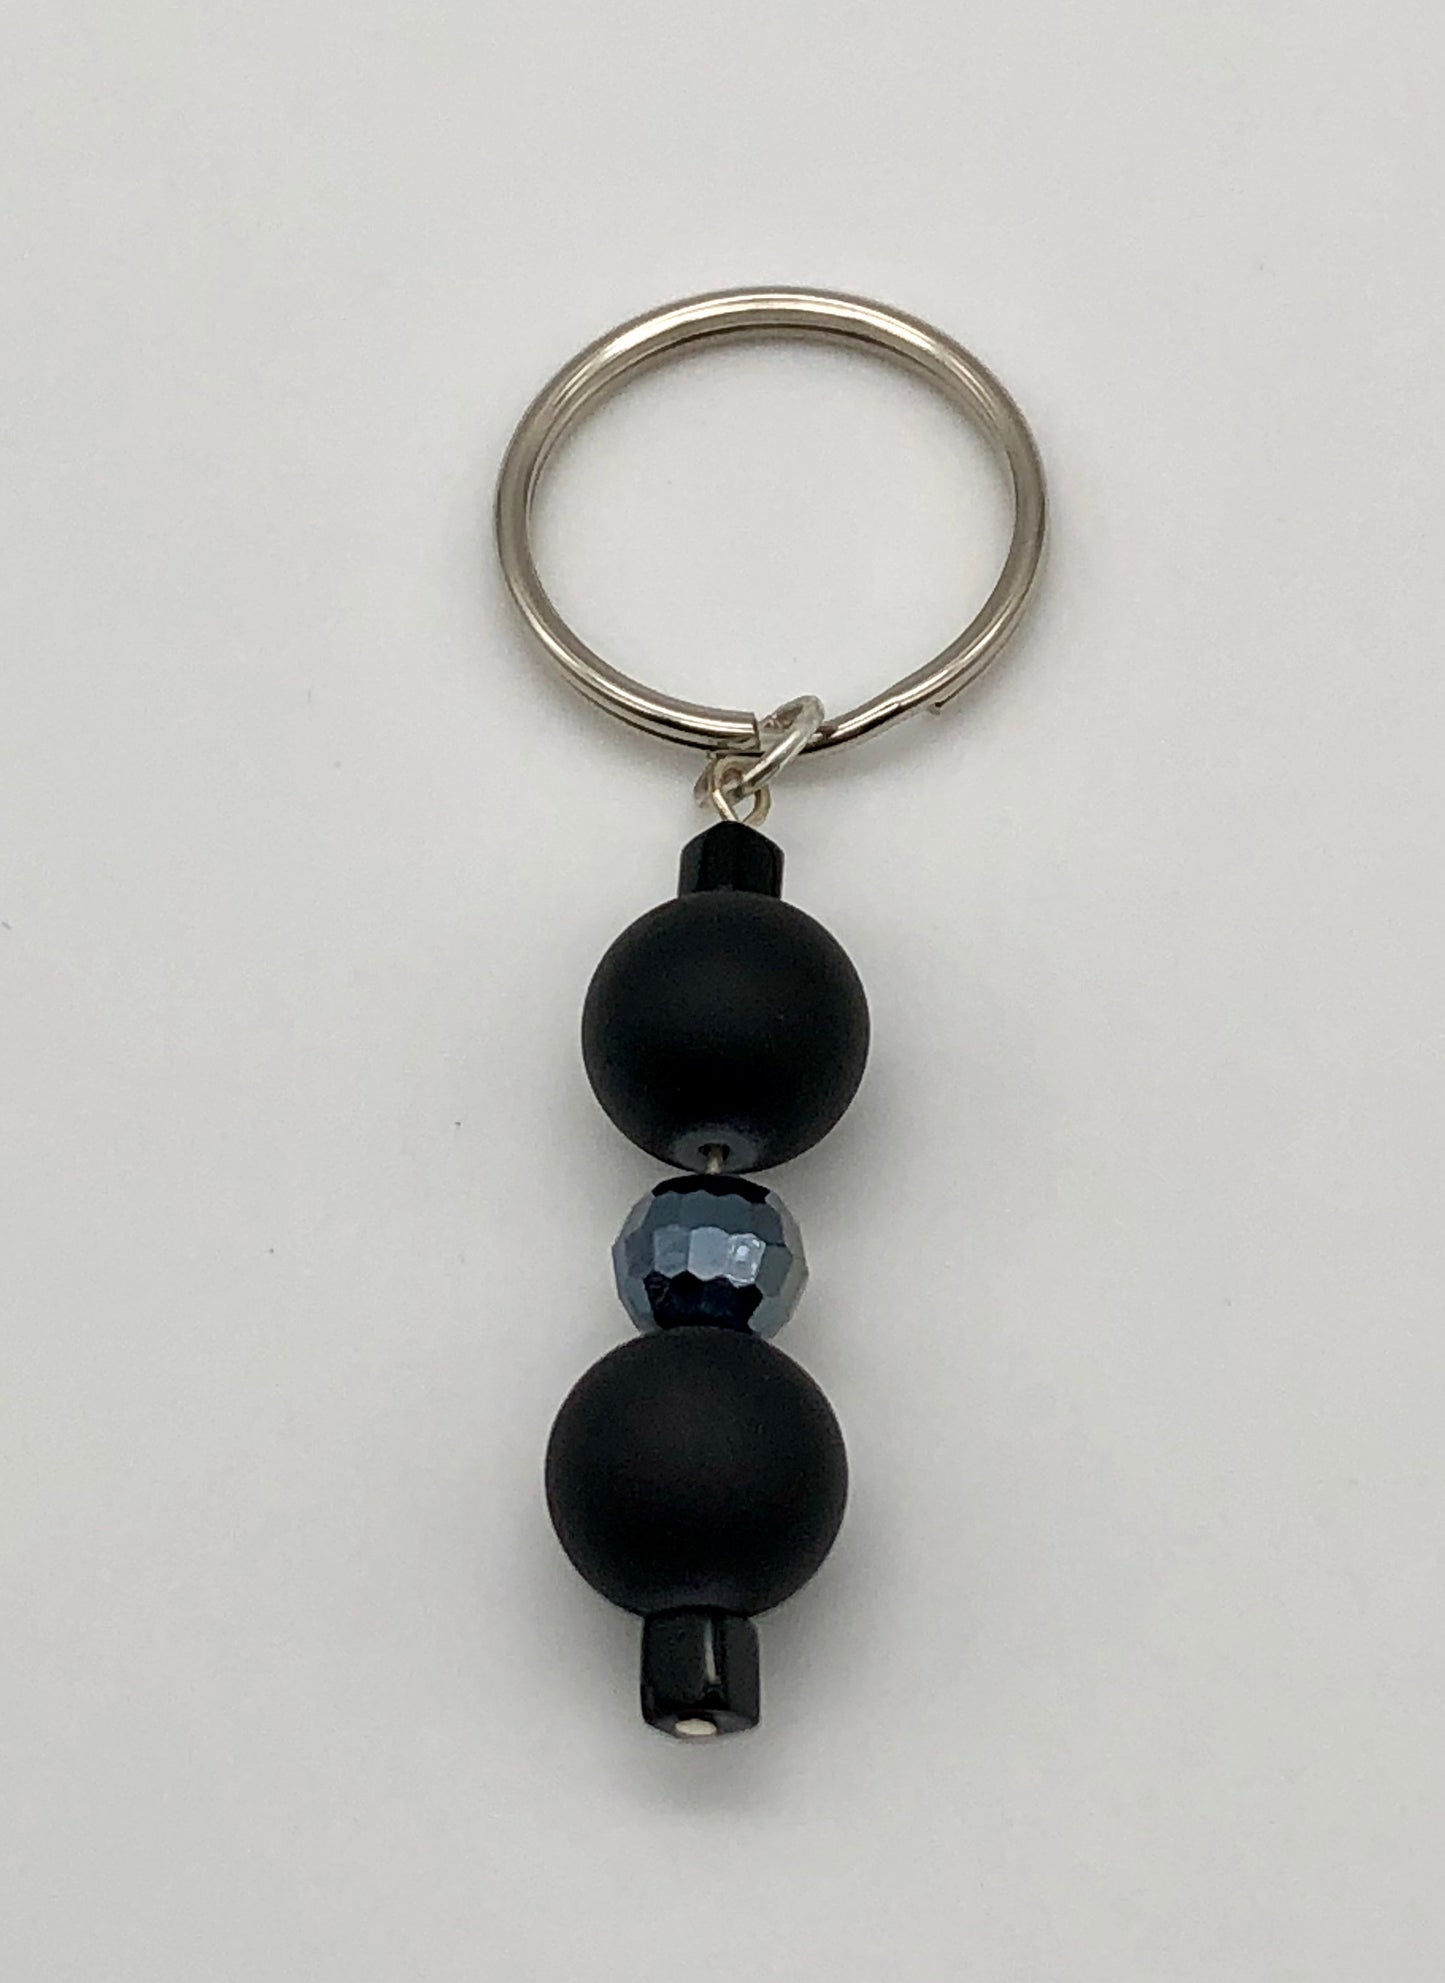 Glass bead keychain, beach shell keychain, silver heart keychain